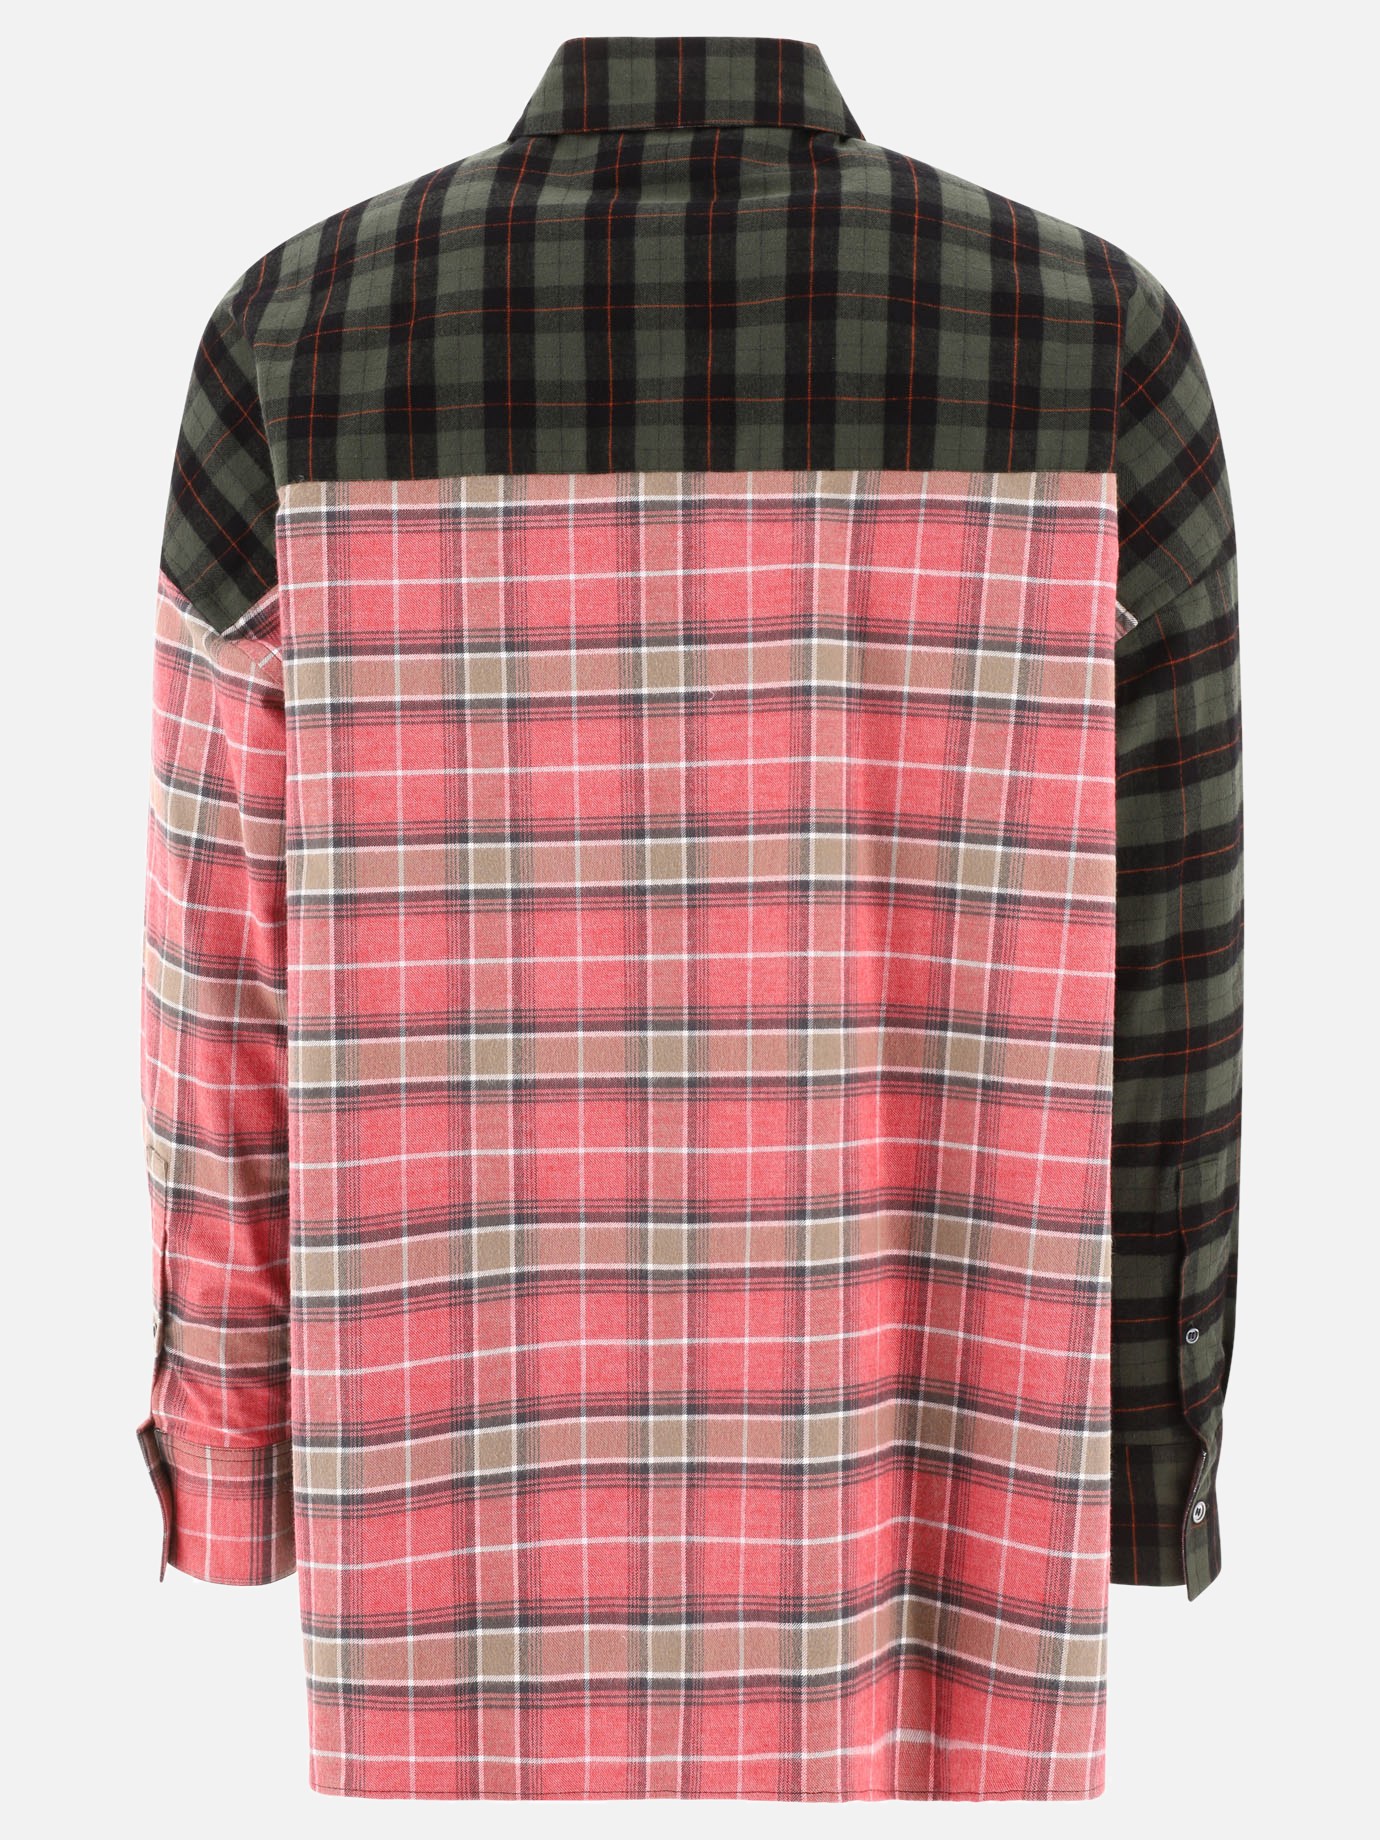 Patchwork tartan shirt by Loewe